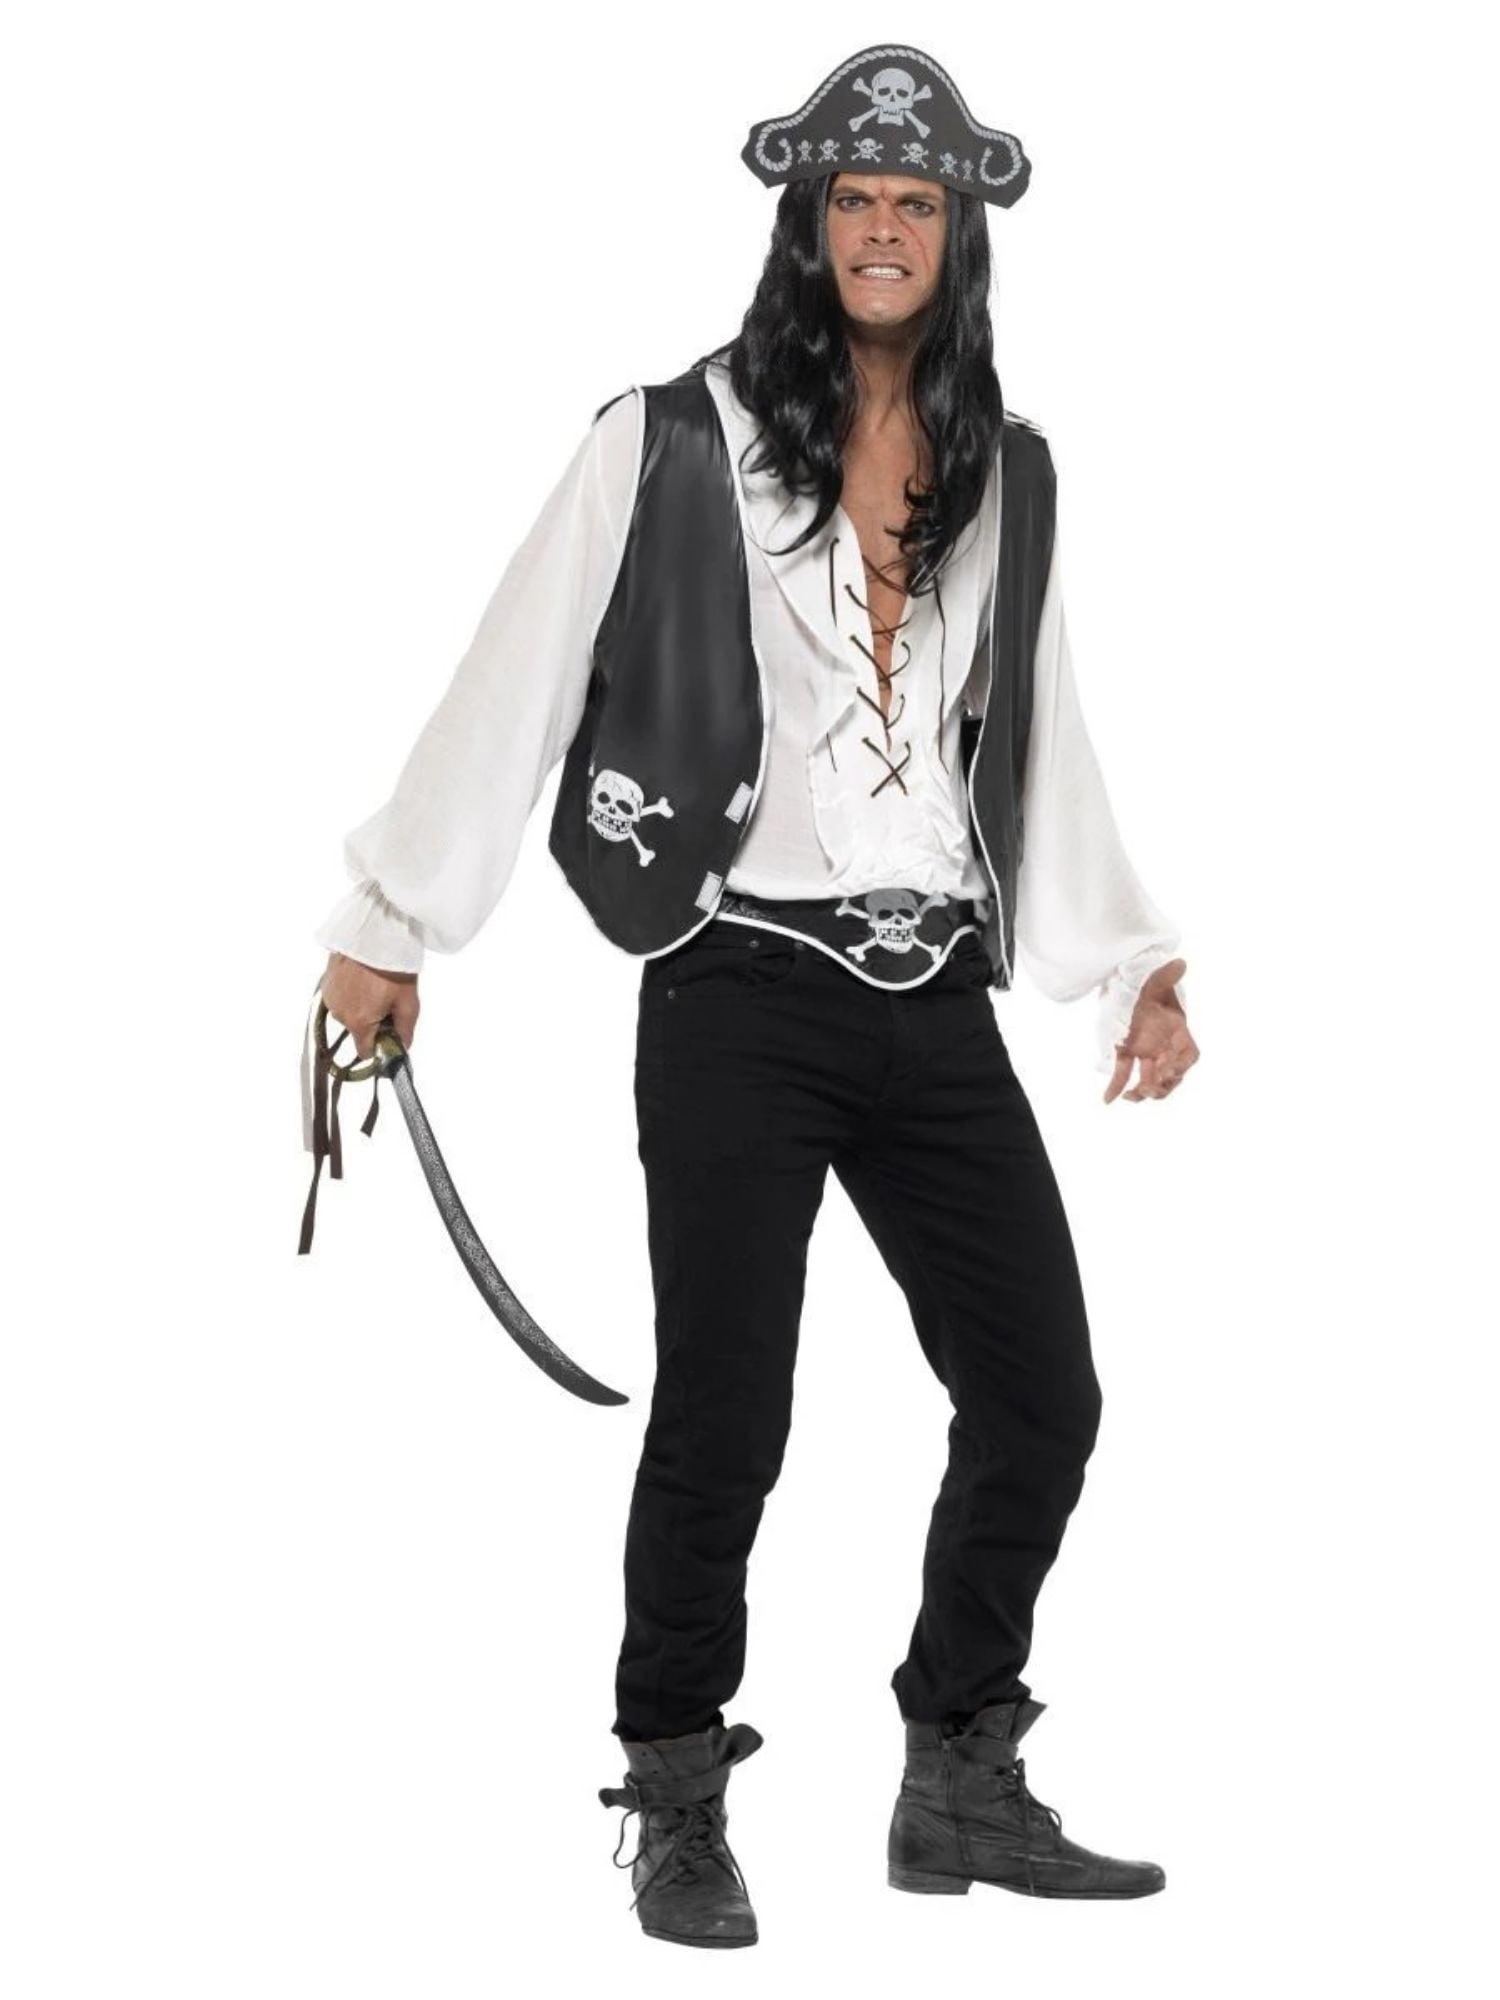 Pirate Costume Mens image picture